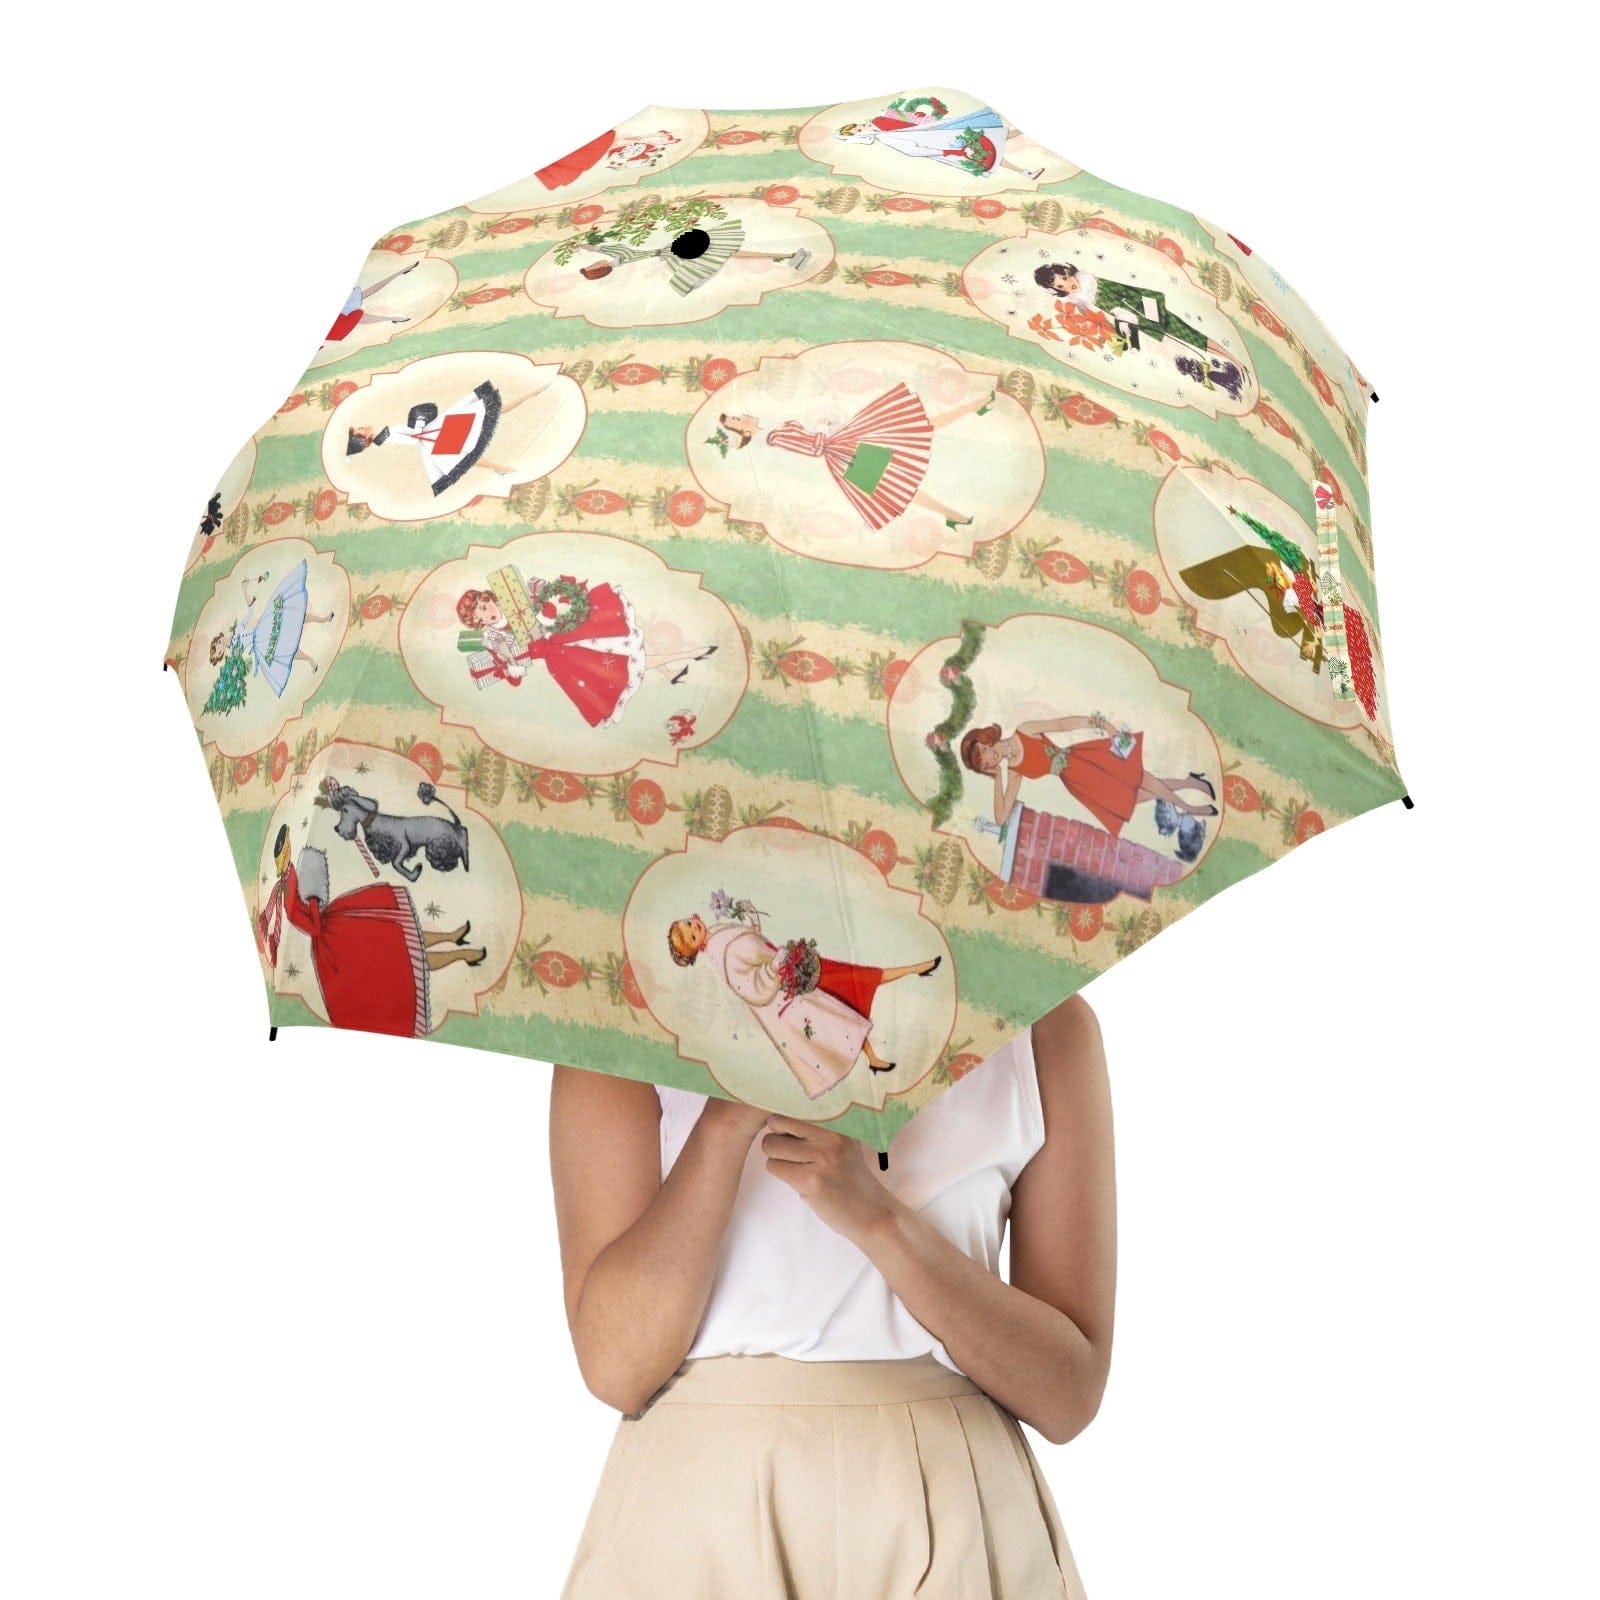 interestprint Vintage 1950s Housewives Christmas Semi-Automatic Foldable Umbrella Umbrellas One Size D2842158